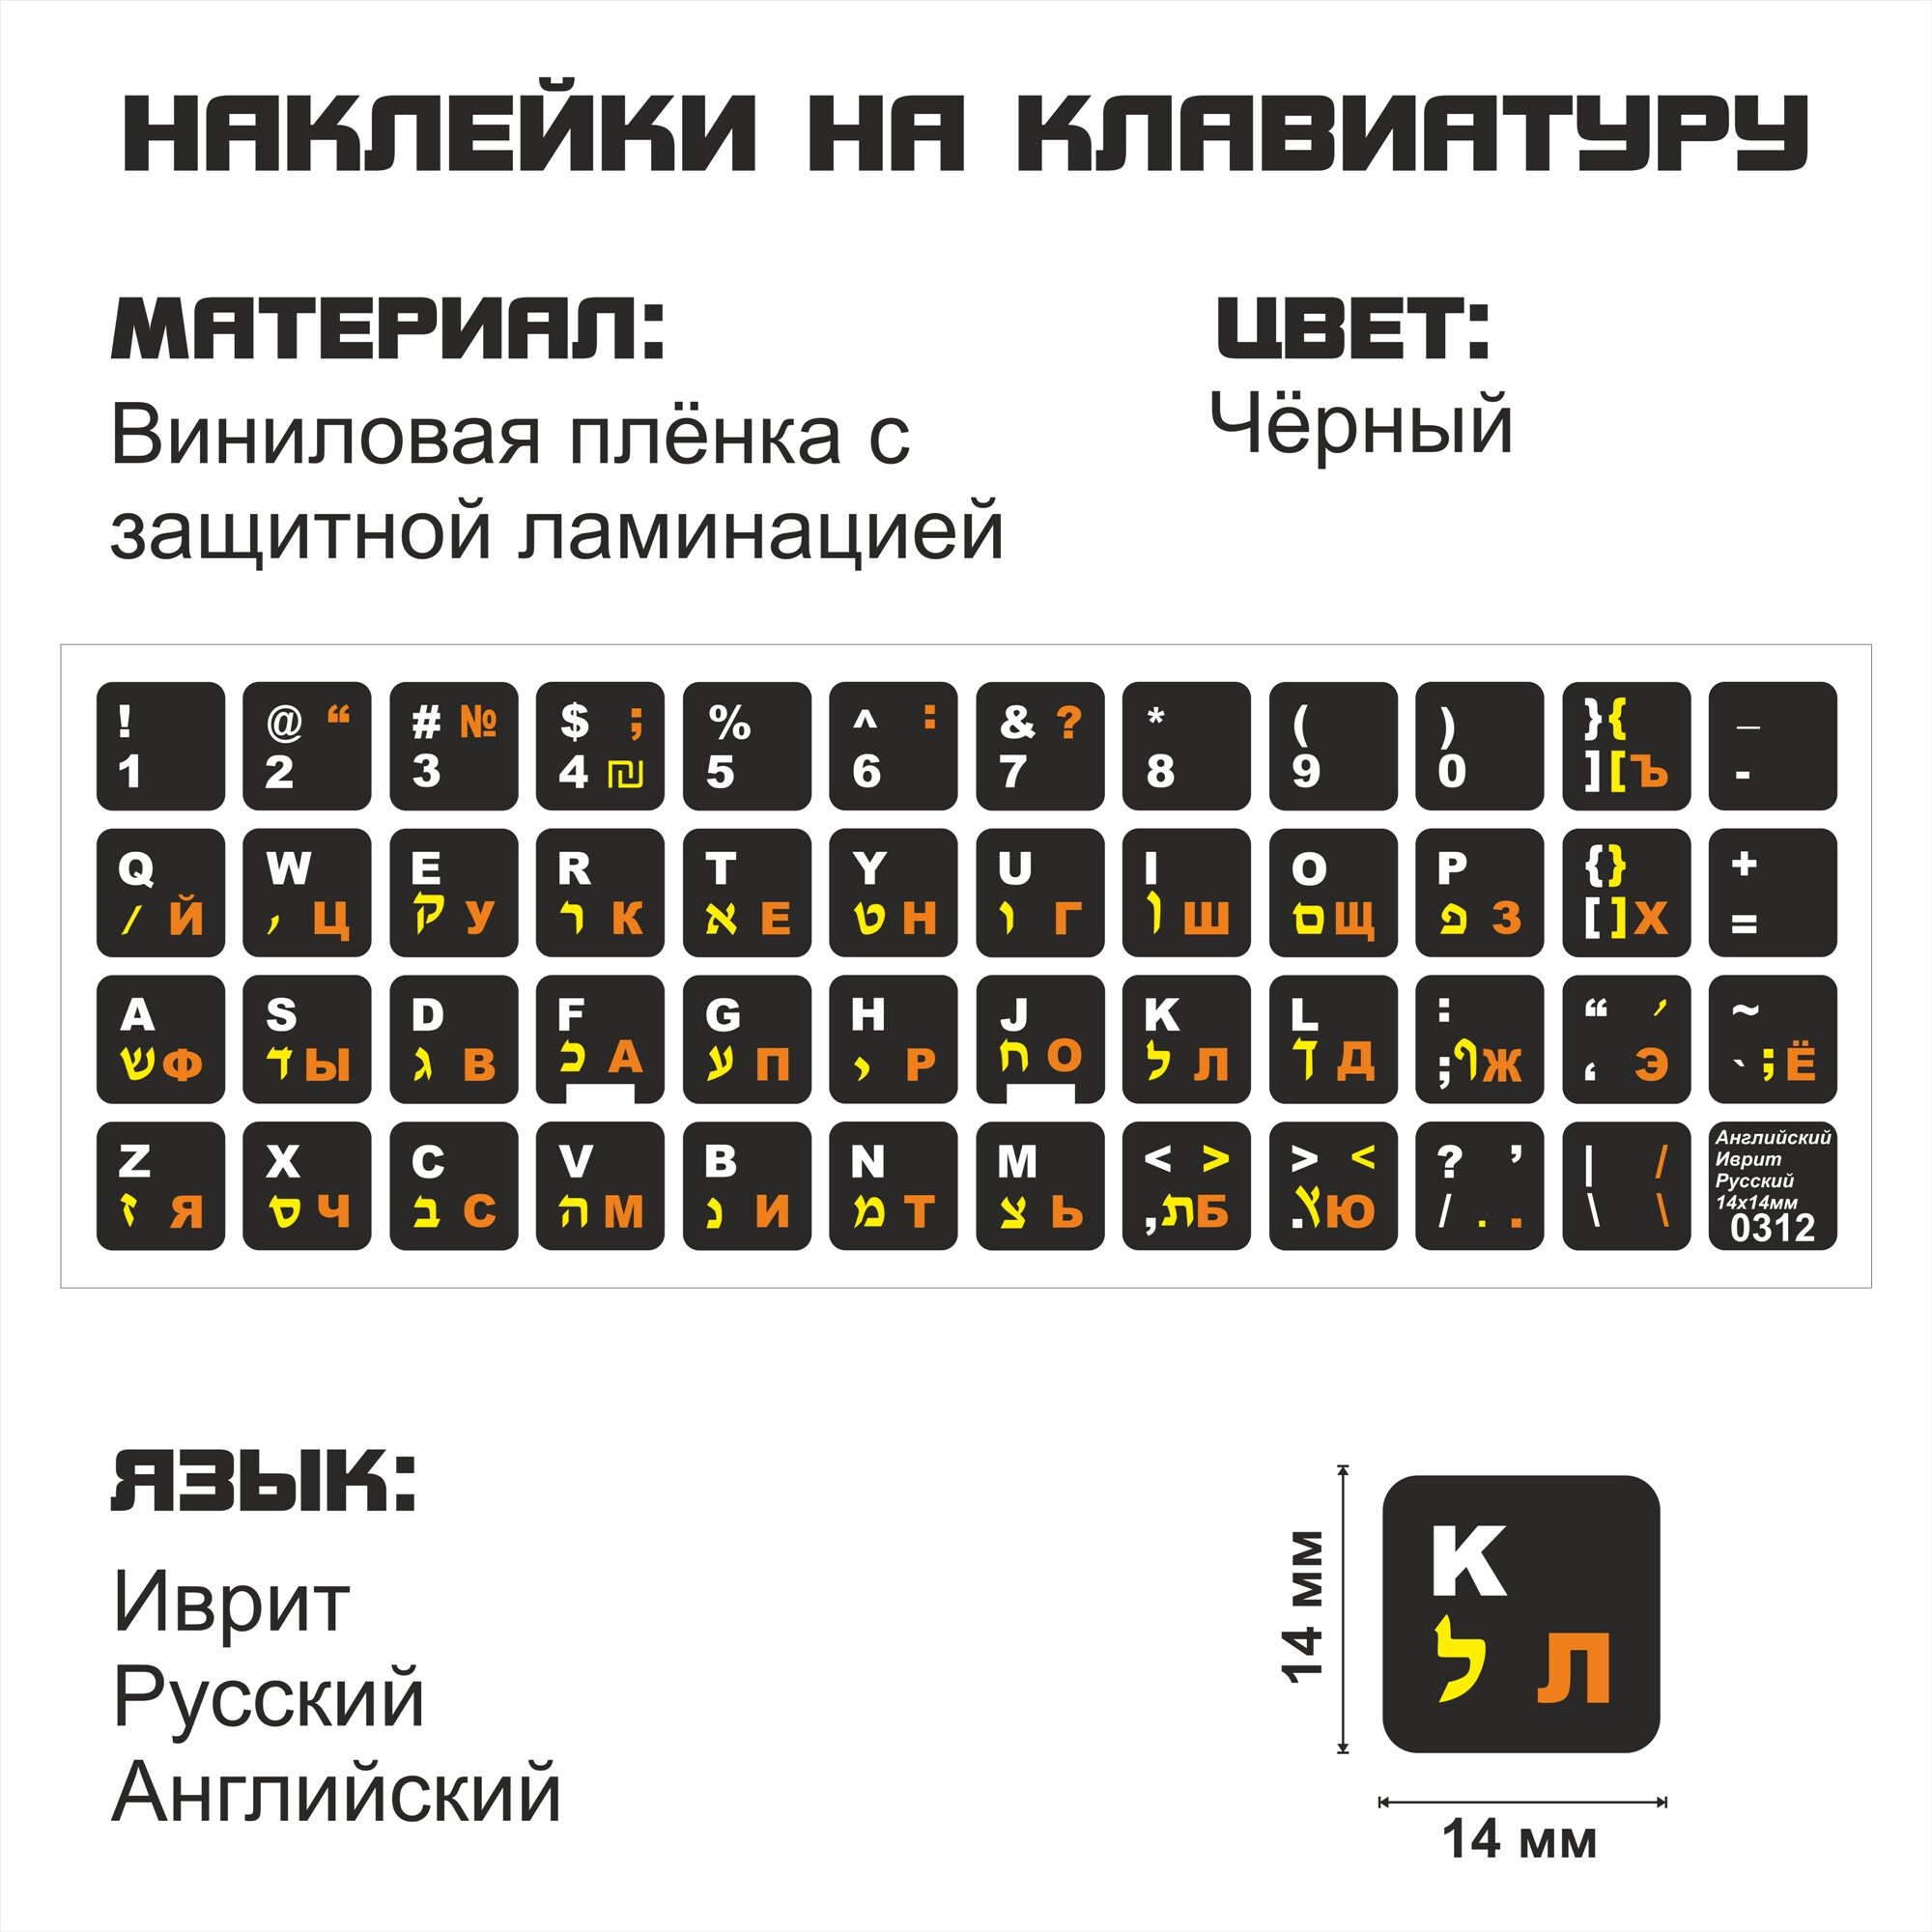 Иврит, Английские, Русские наклейки на клавиатуру 14x14 мм.